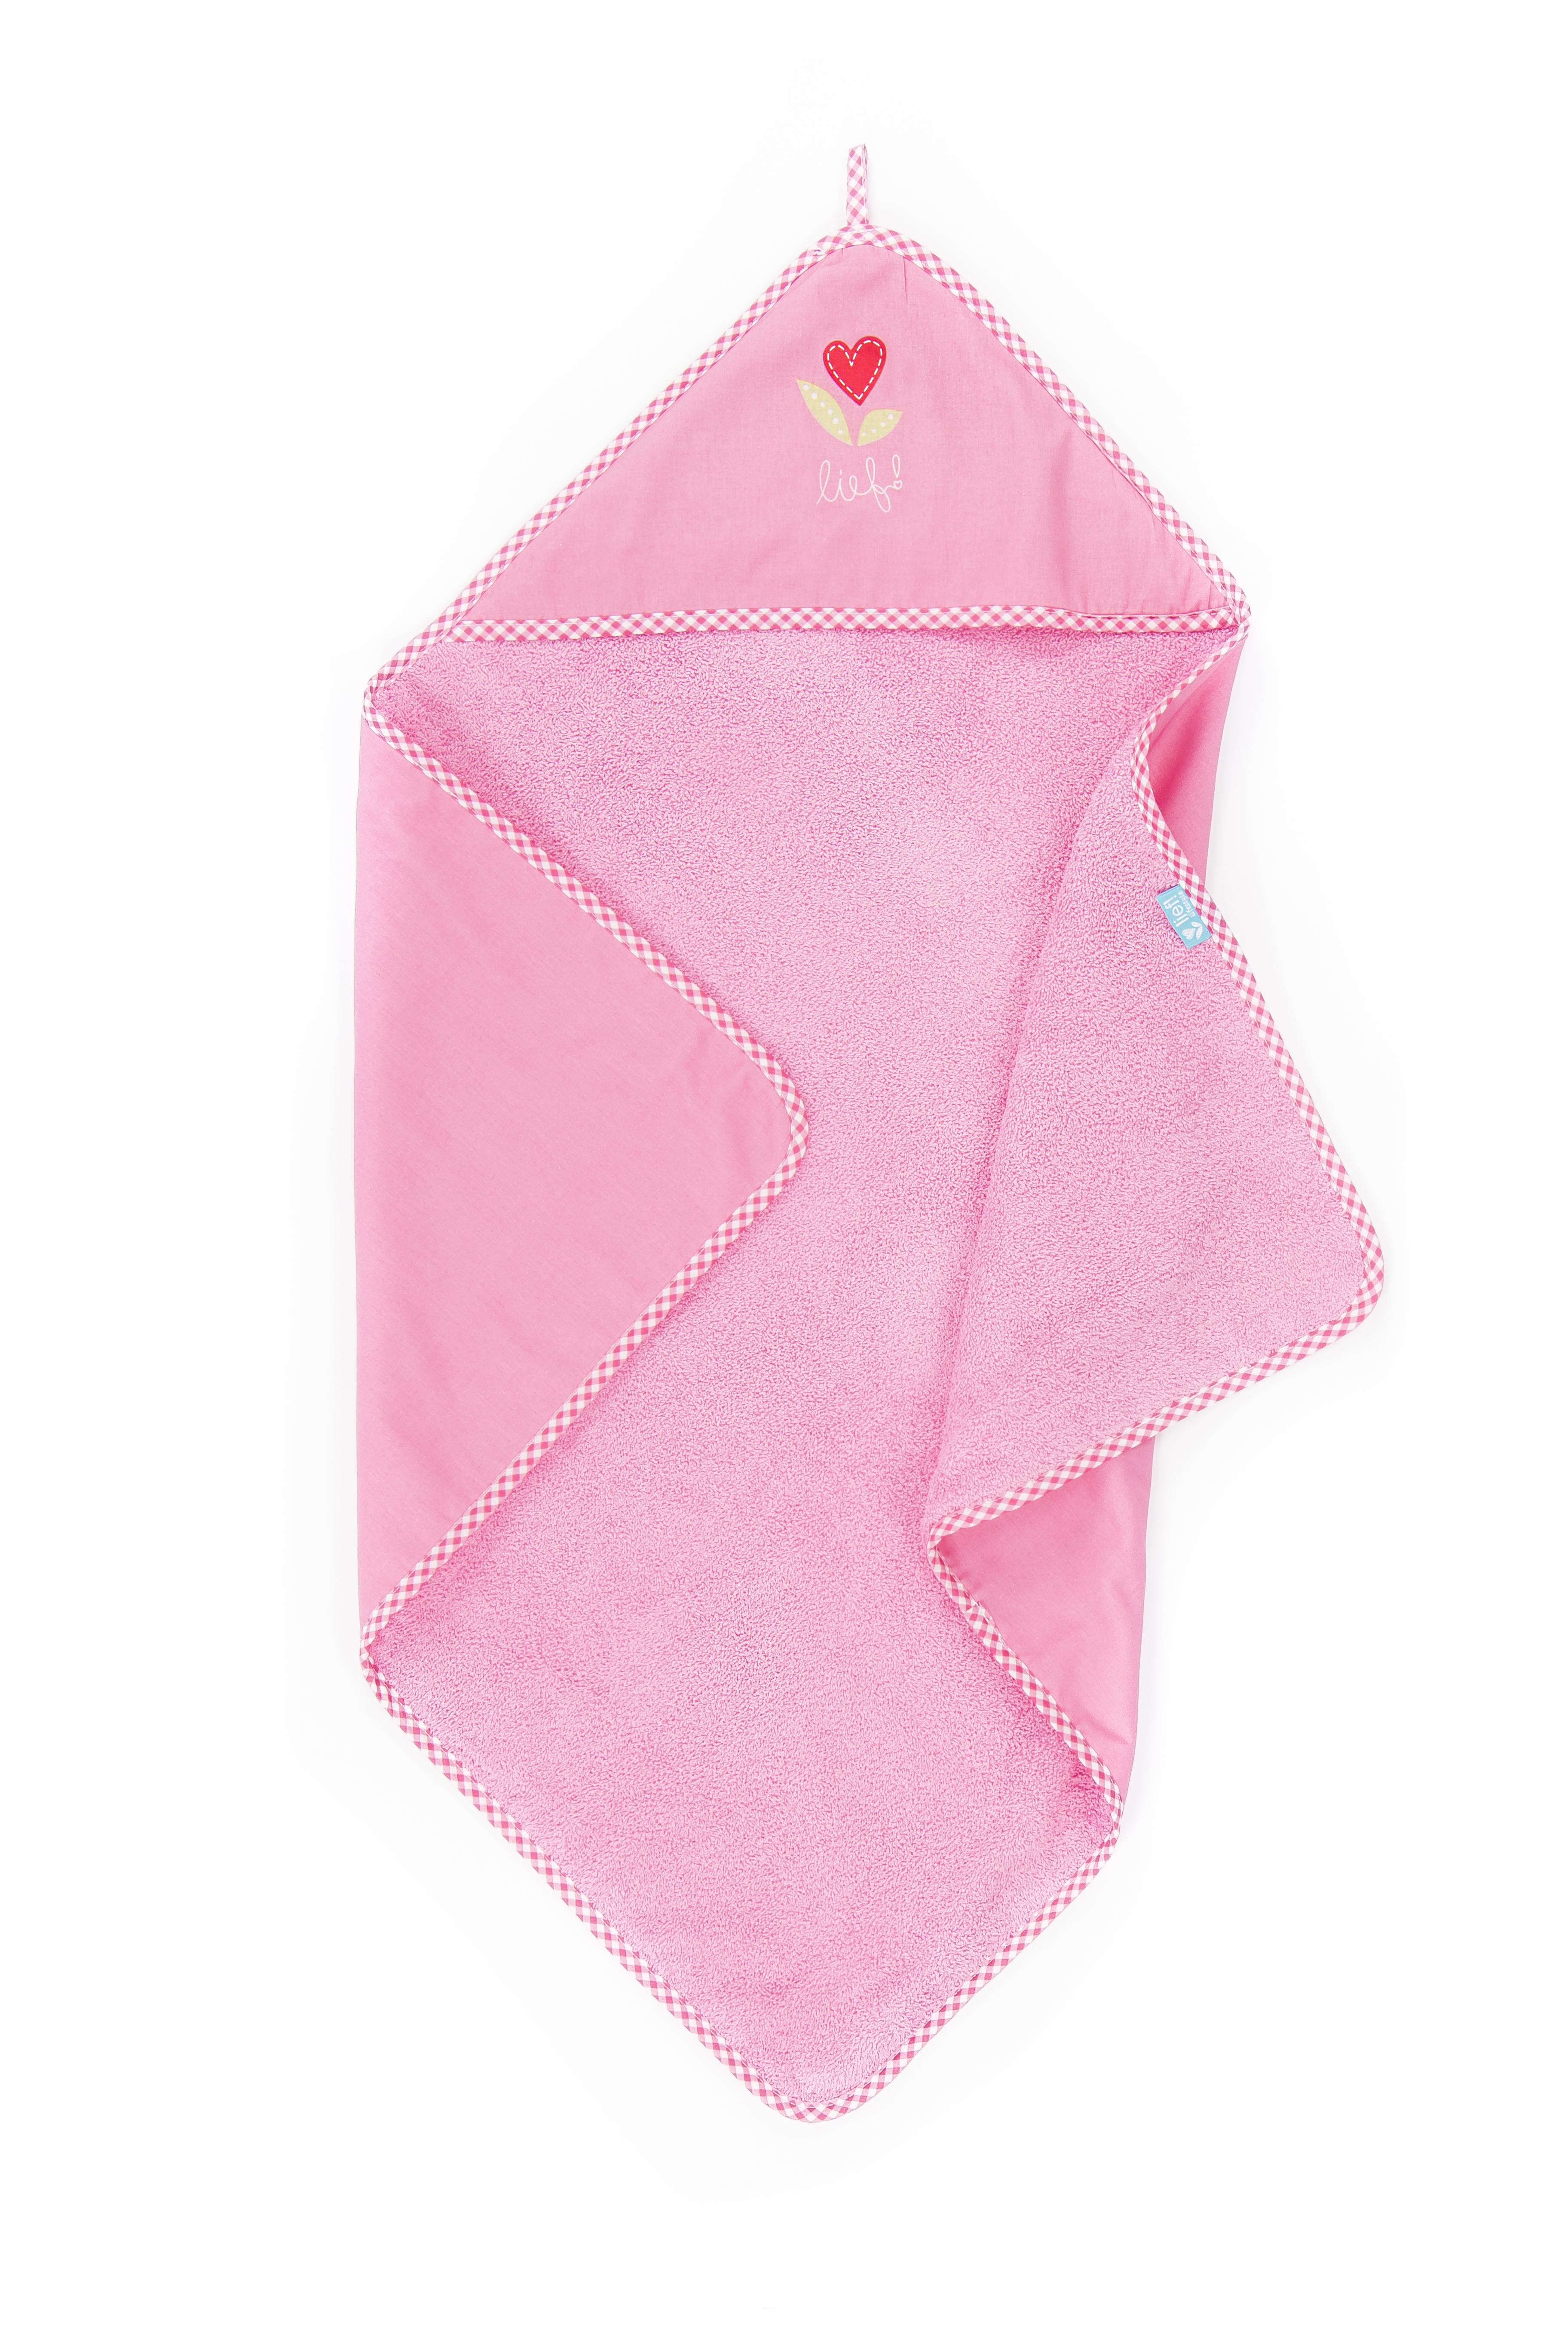 Cape de bain Girl uni pink, 75x75 cm